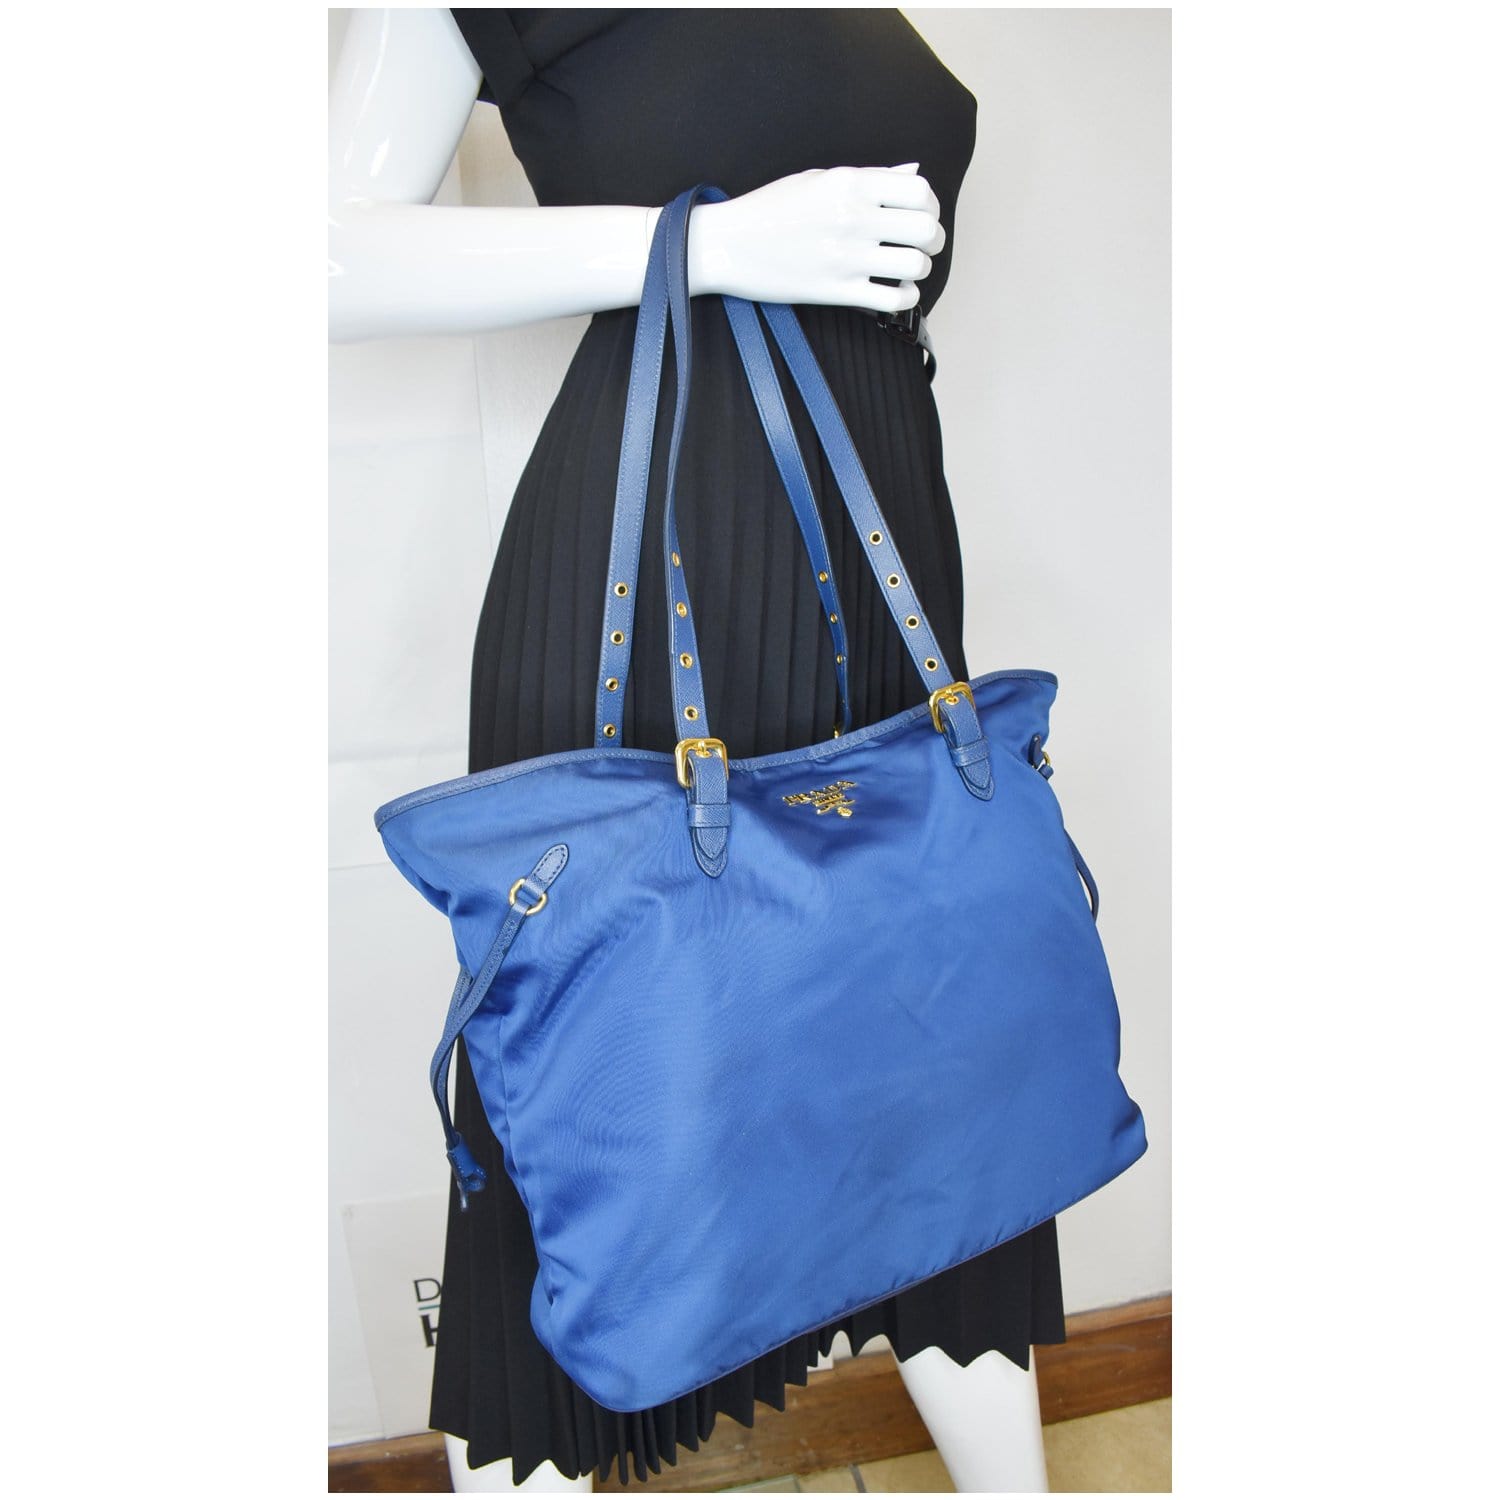 100% authenticity Guaranteed - Prada Nylon Leather Hand Bag